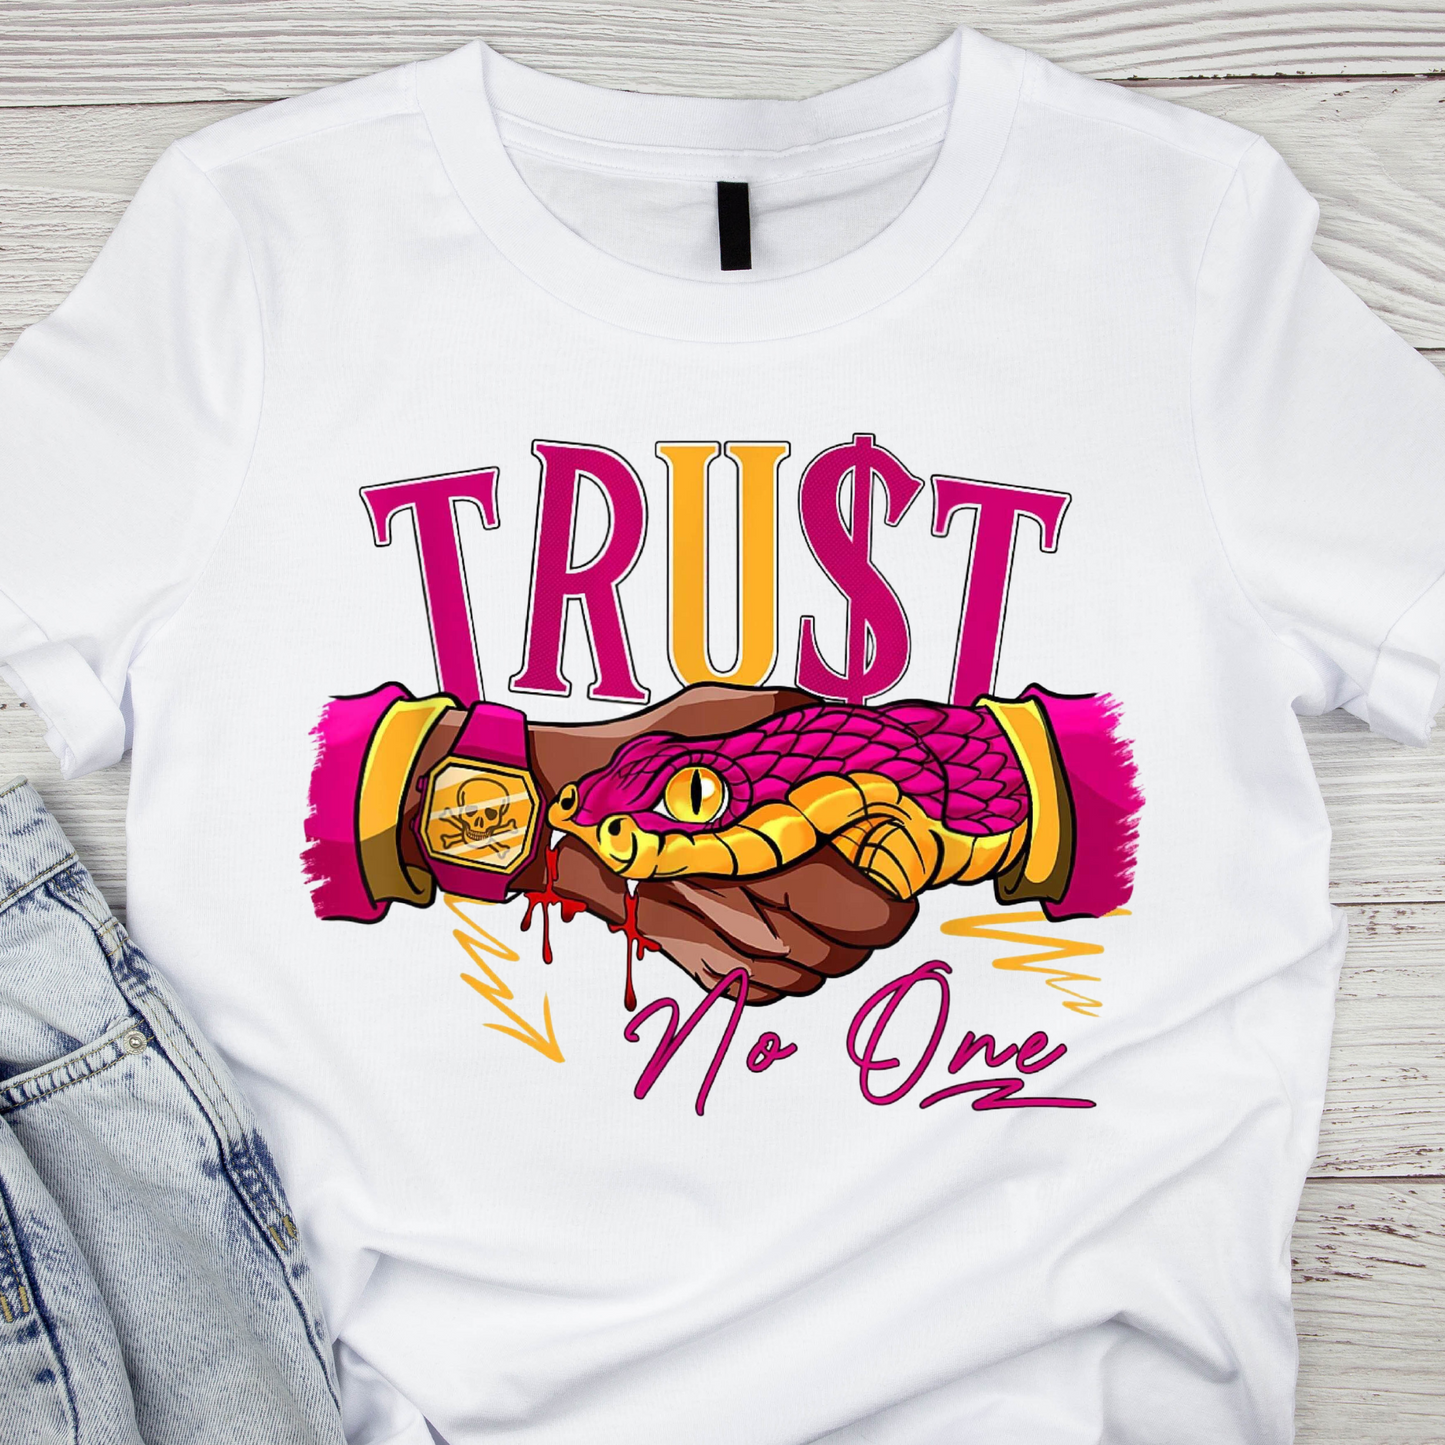 Trust No One (Transfer)